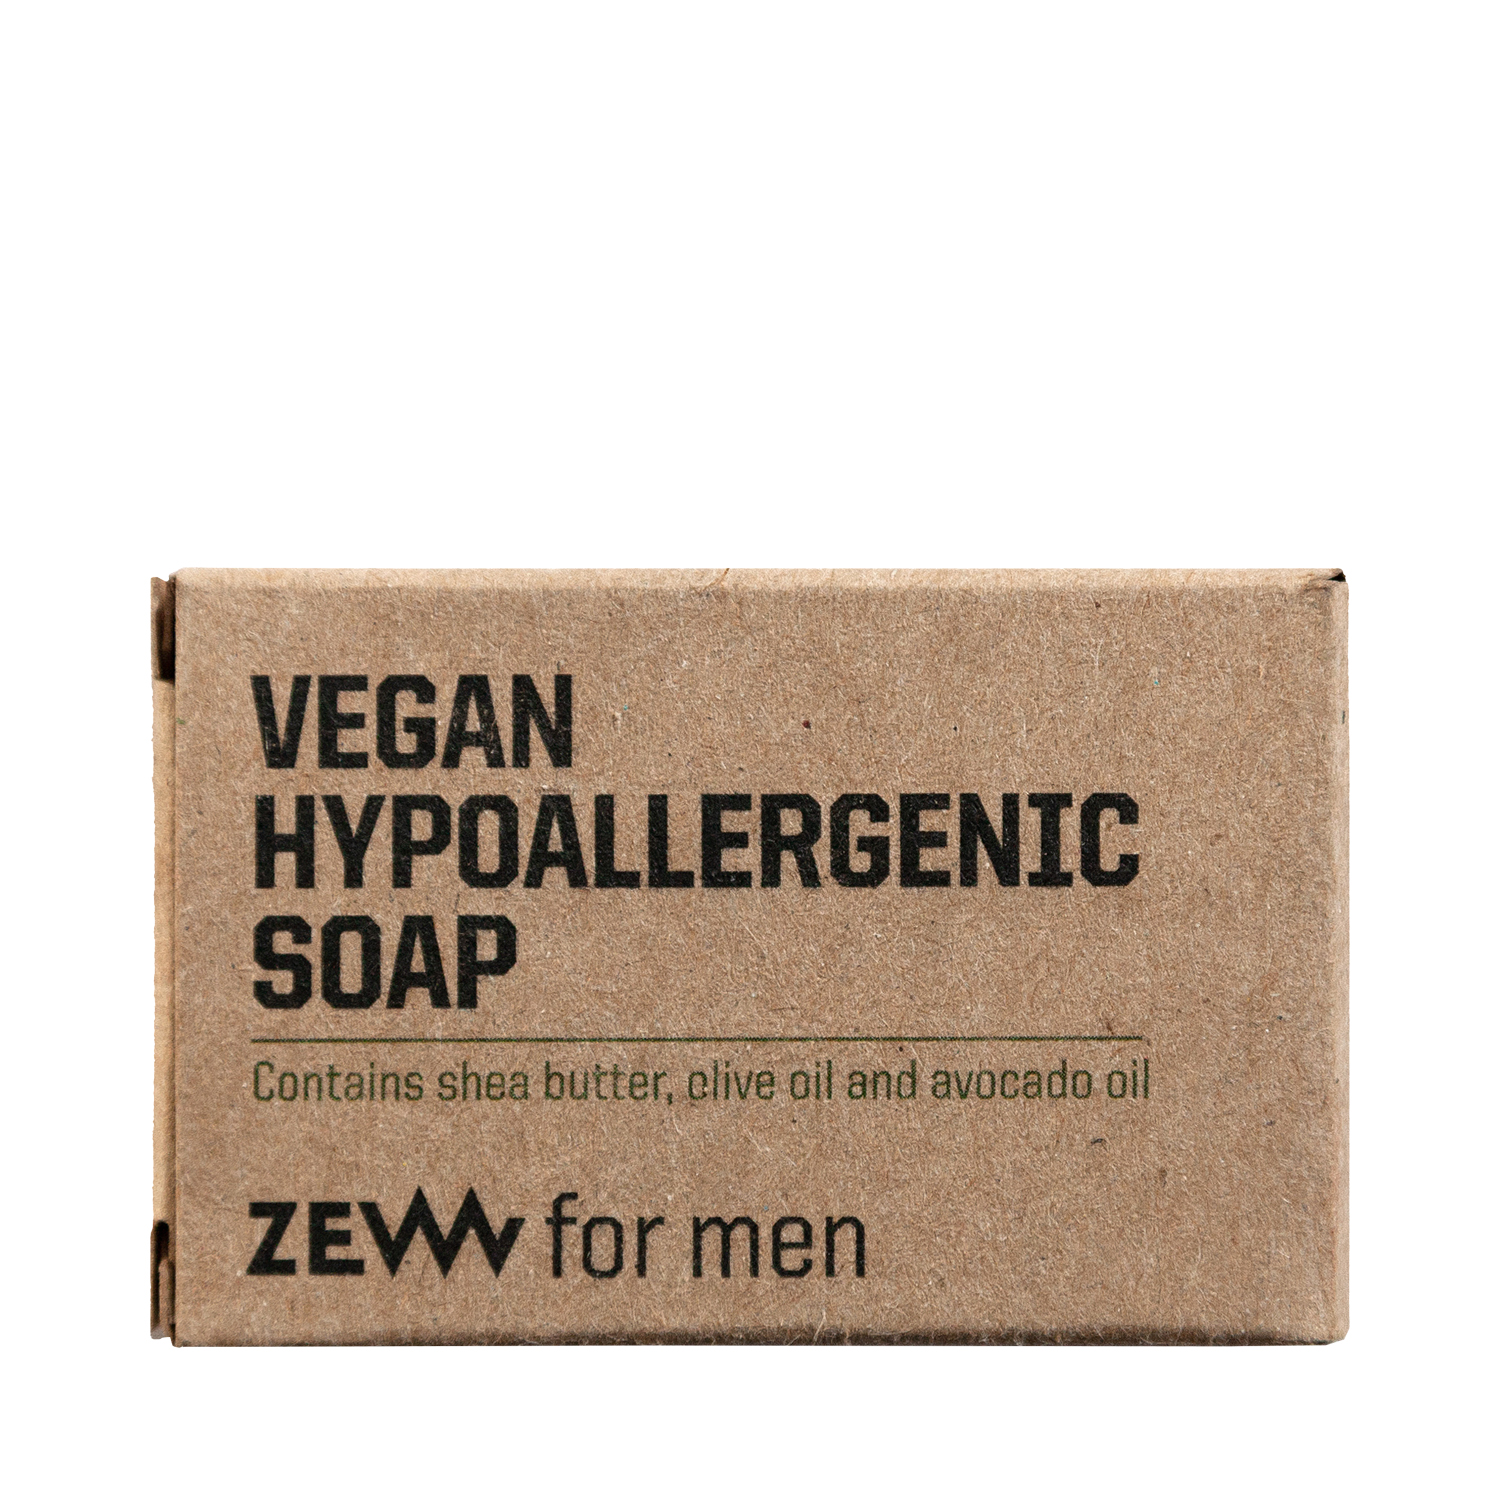 ZEW for men - Vegan Hypoallergenic Soap - Vegane Seife